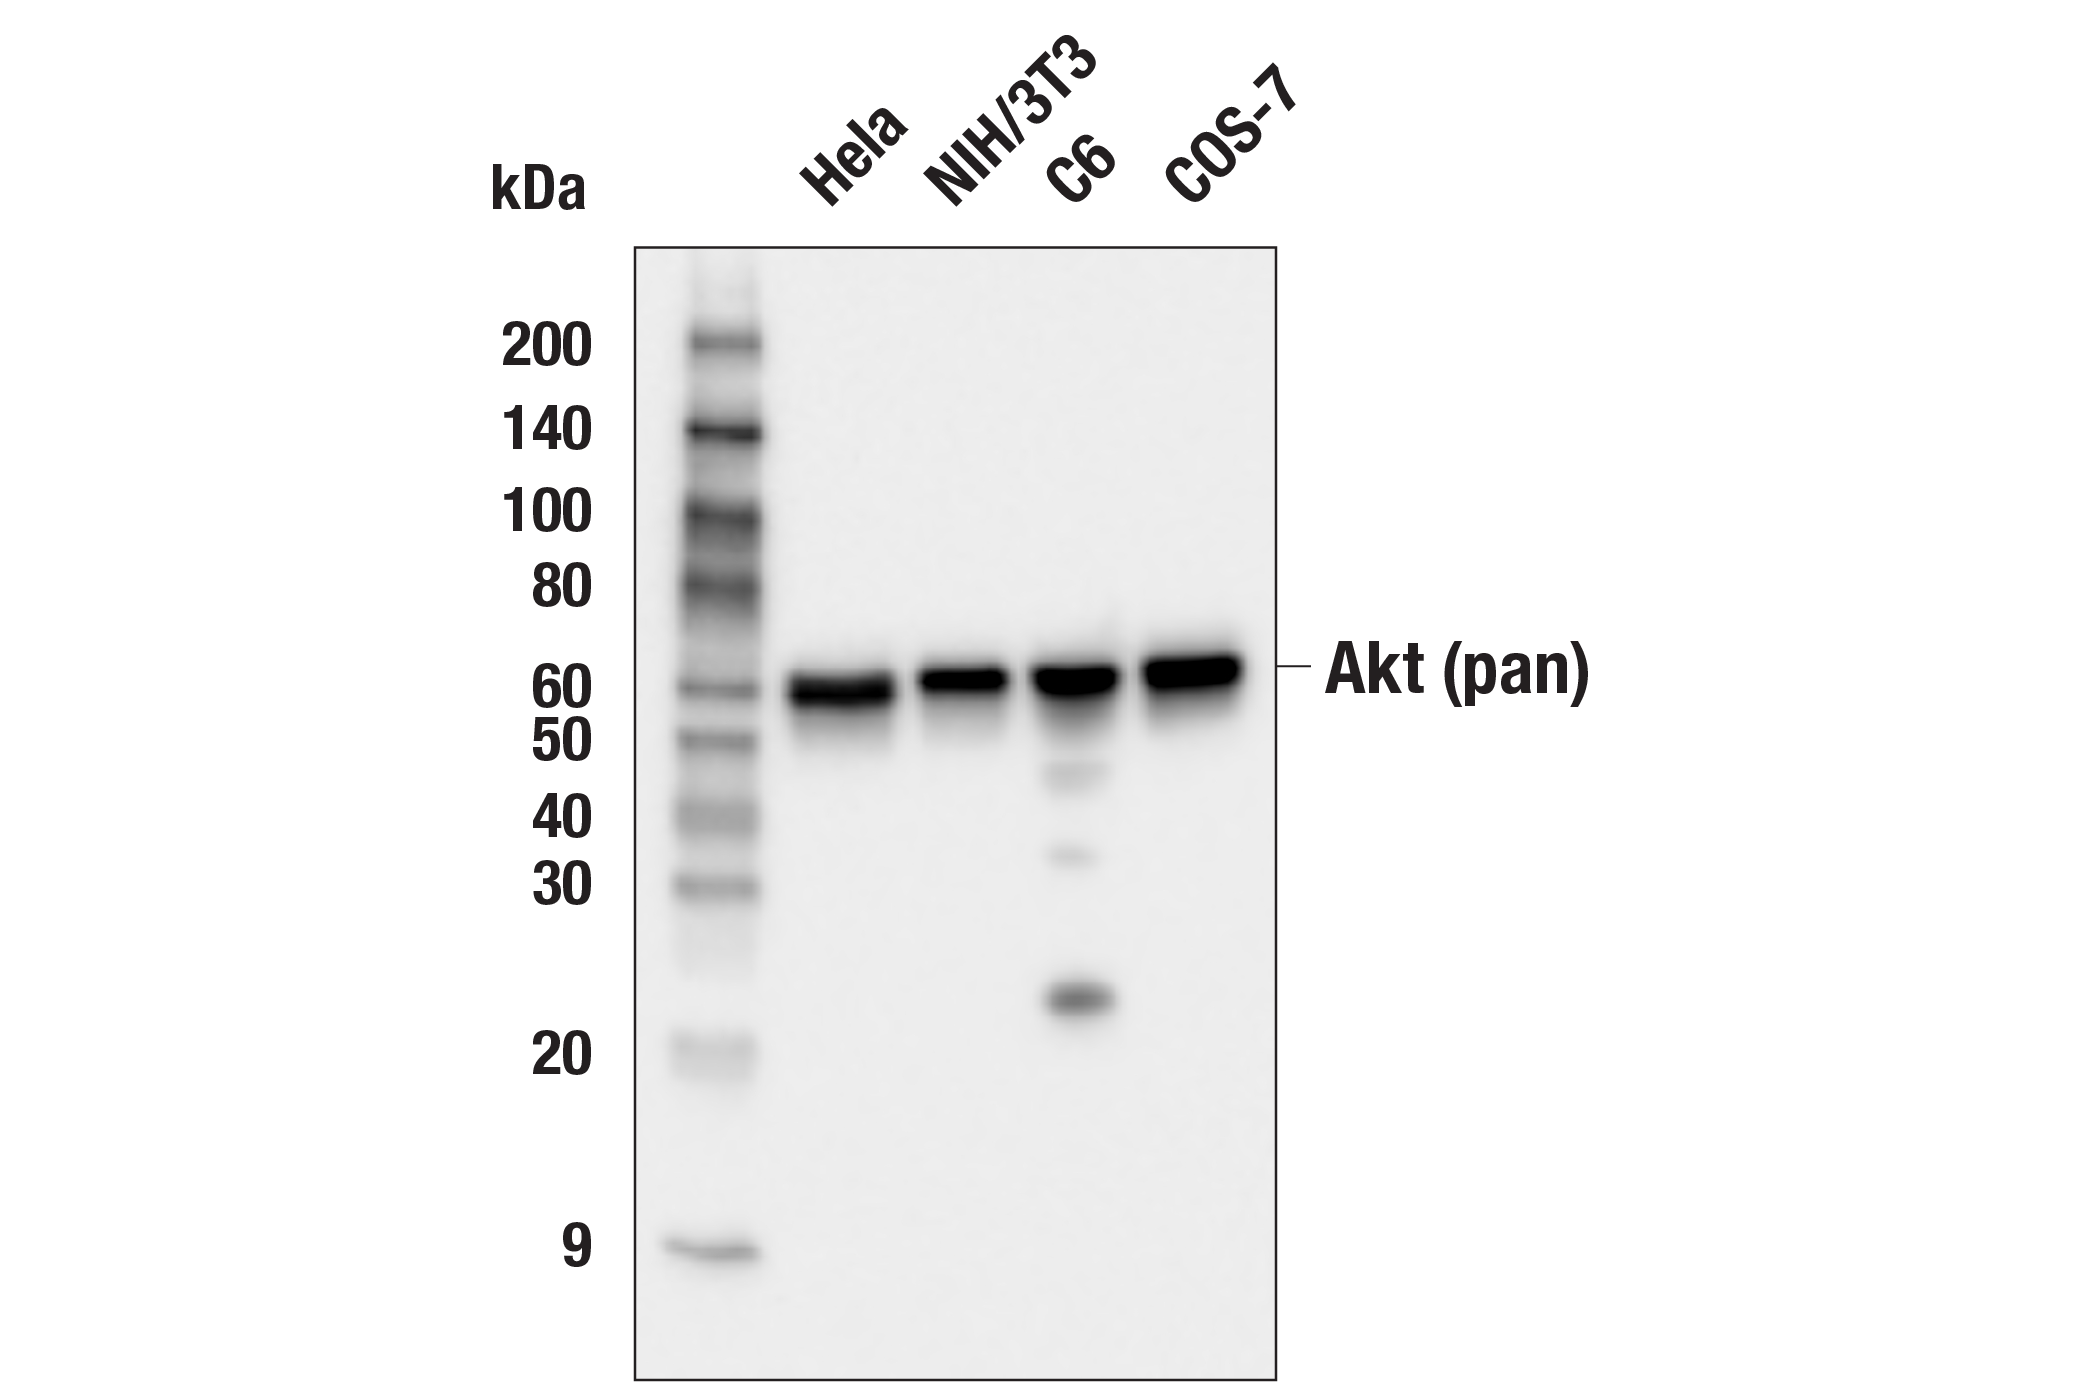  Image 3: PhosphoPlus® Akt (Ser473) Antibody Kit